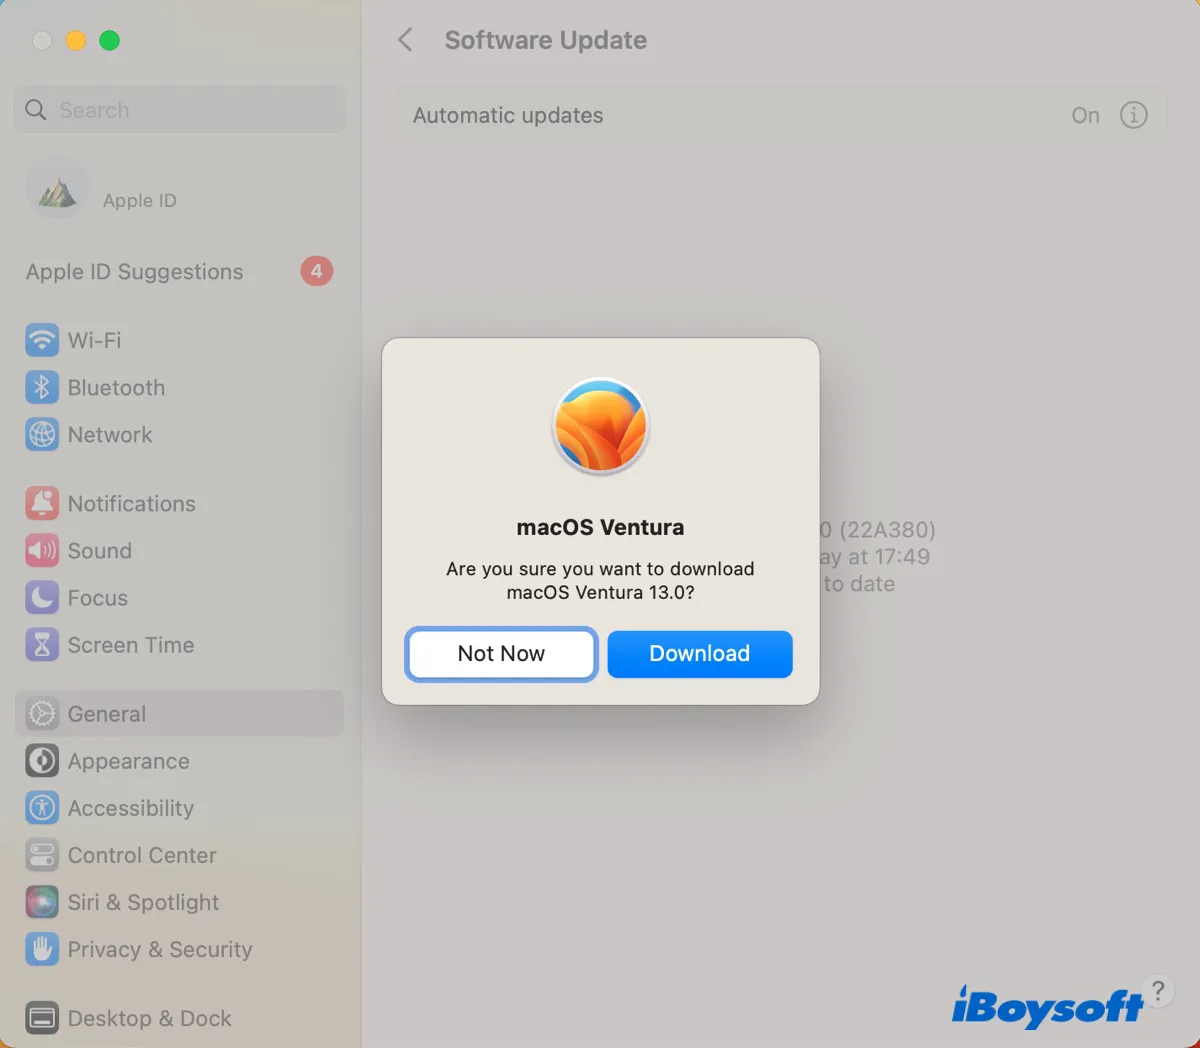 Click Download to download macOS Ventura full installer